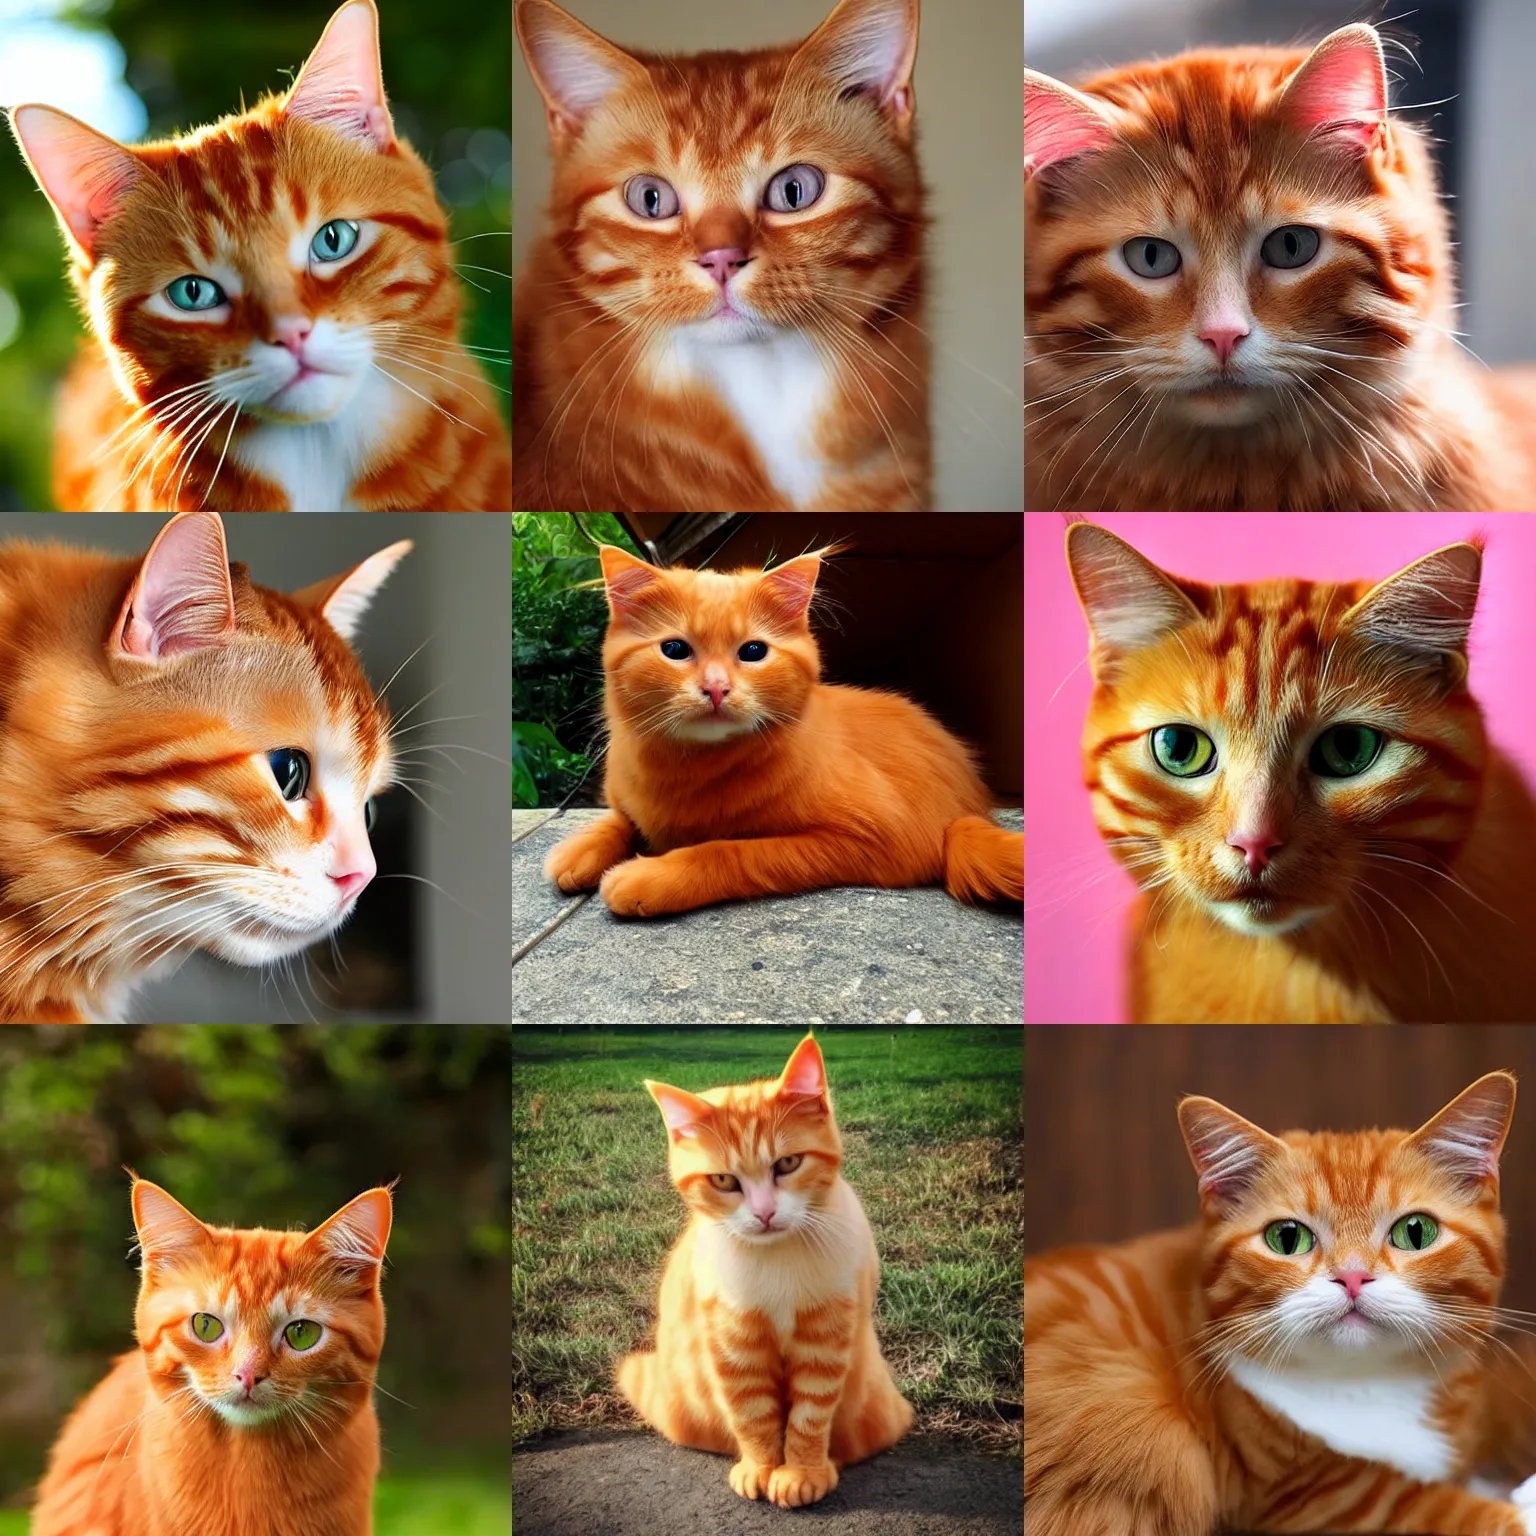 Prompt: beautiful ginger cat